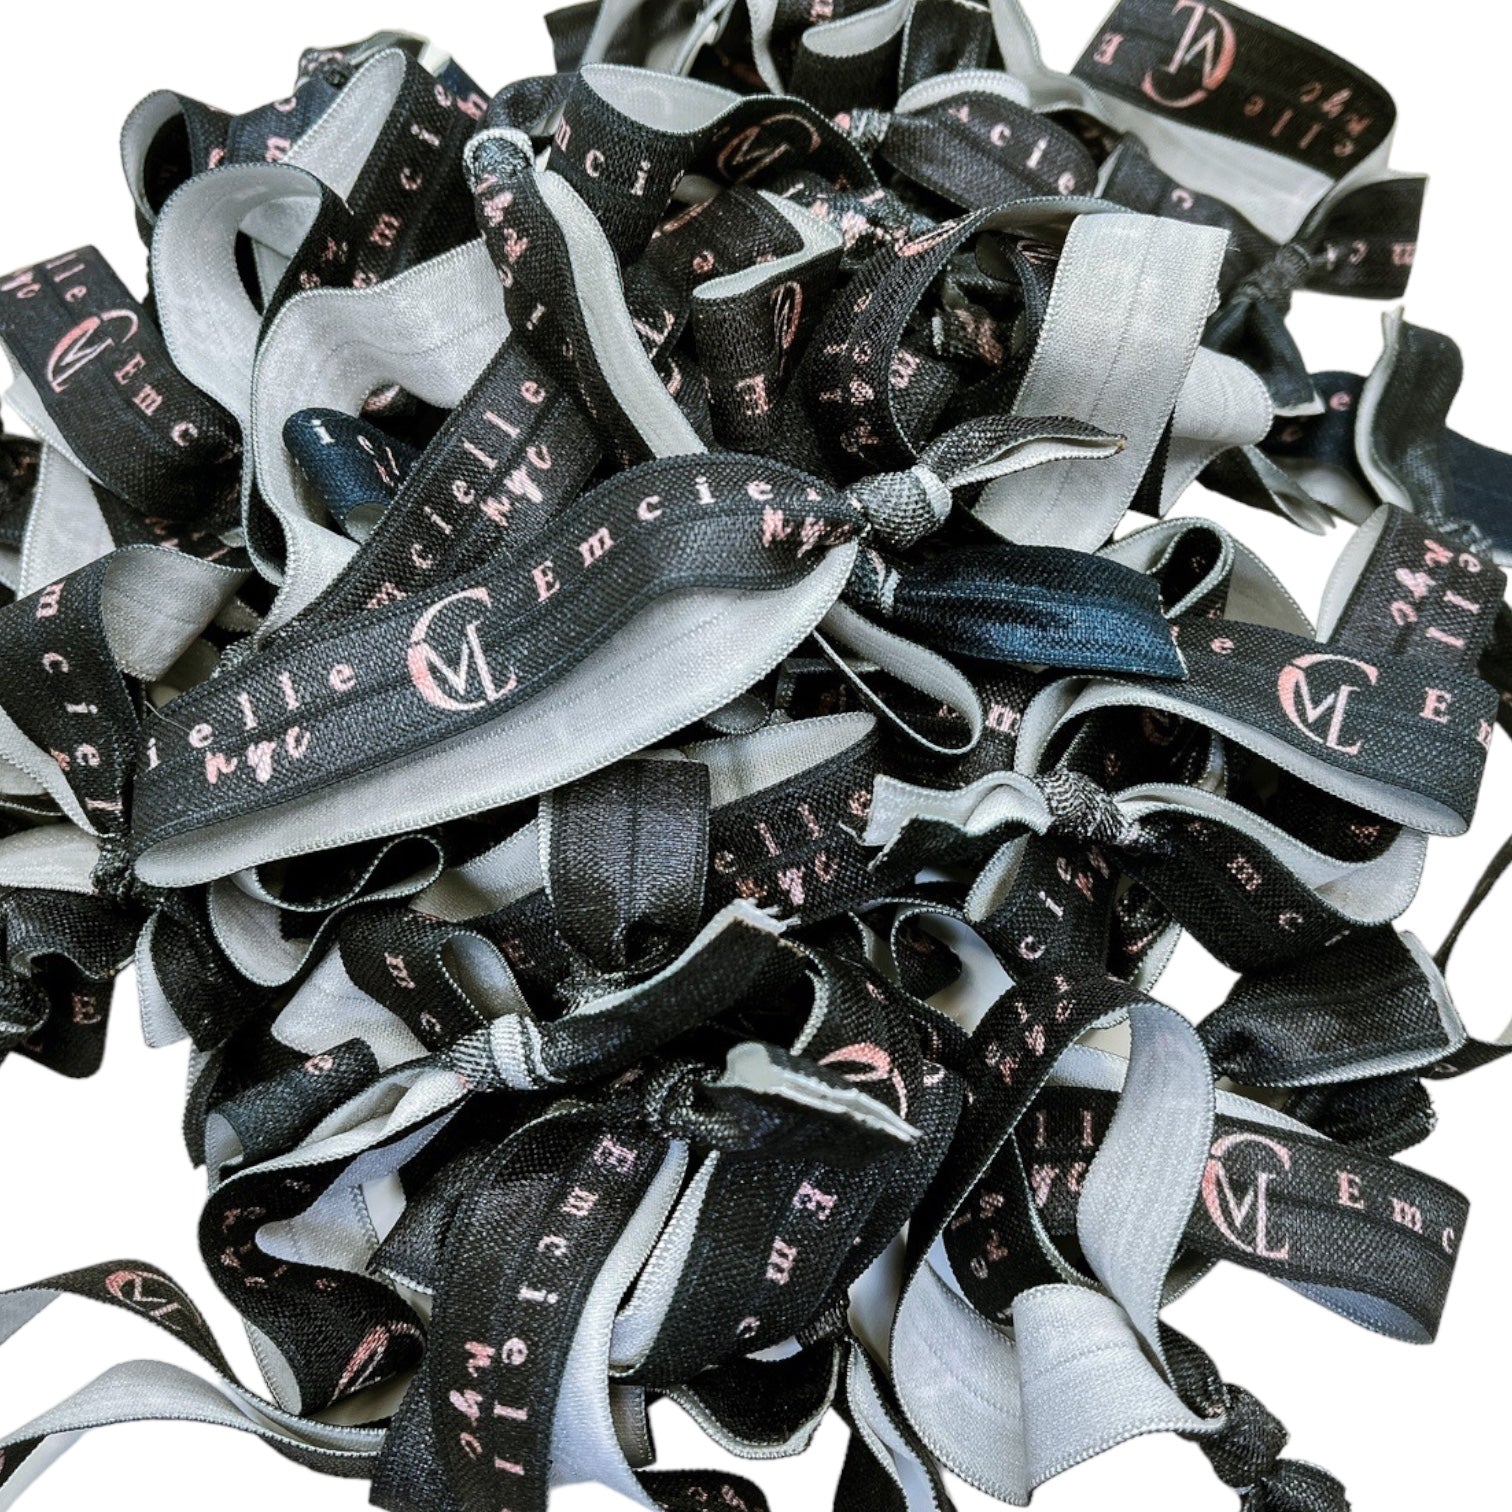 Custom Fitness Gym Promotional Hair Tie Bracelets - Add your logo and information - Bulk Discounts!